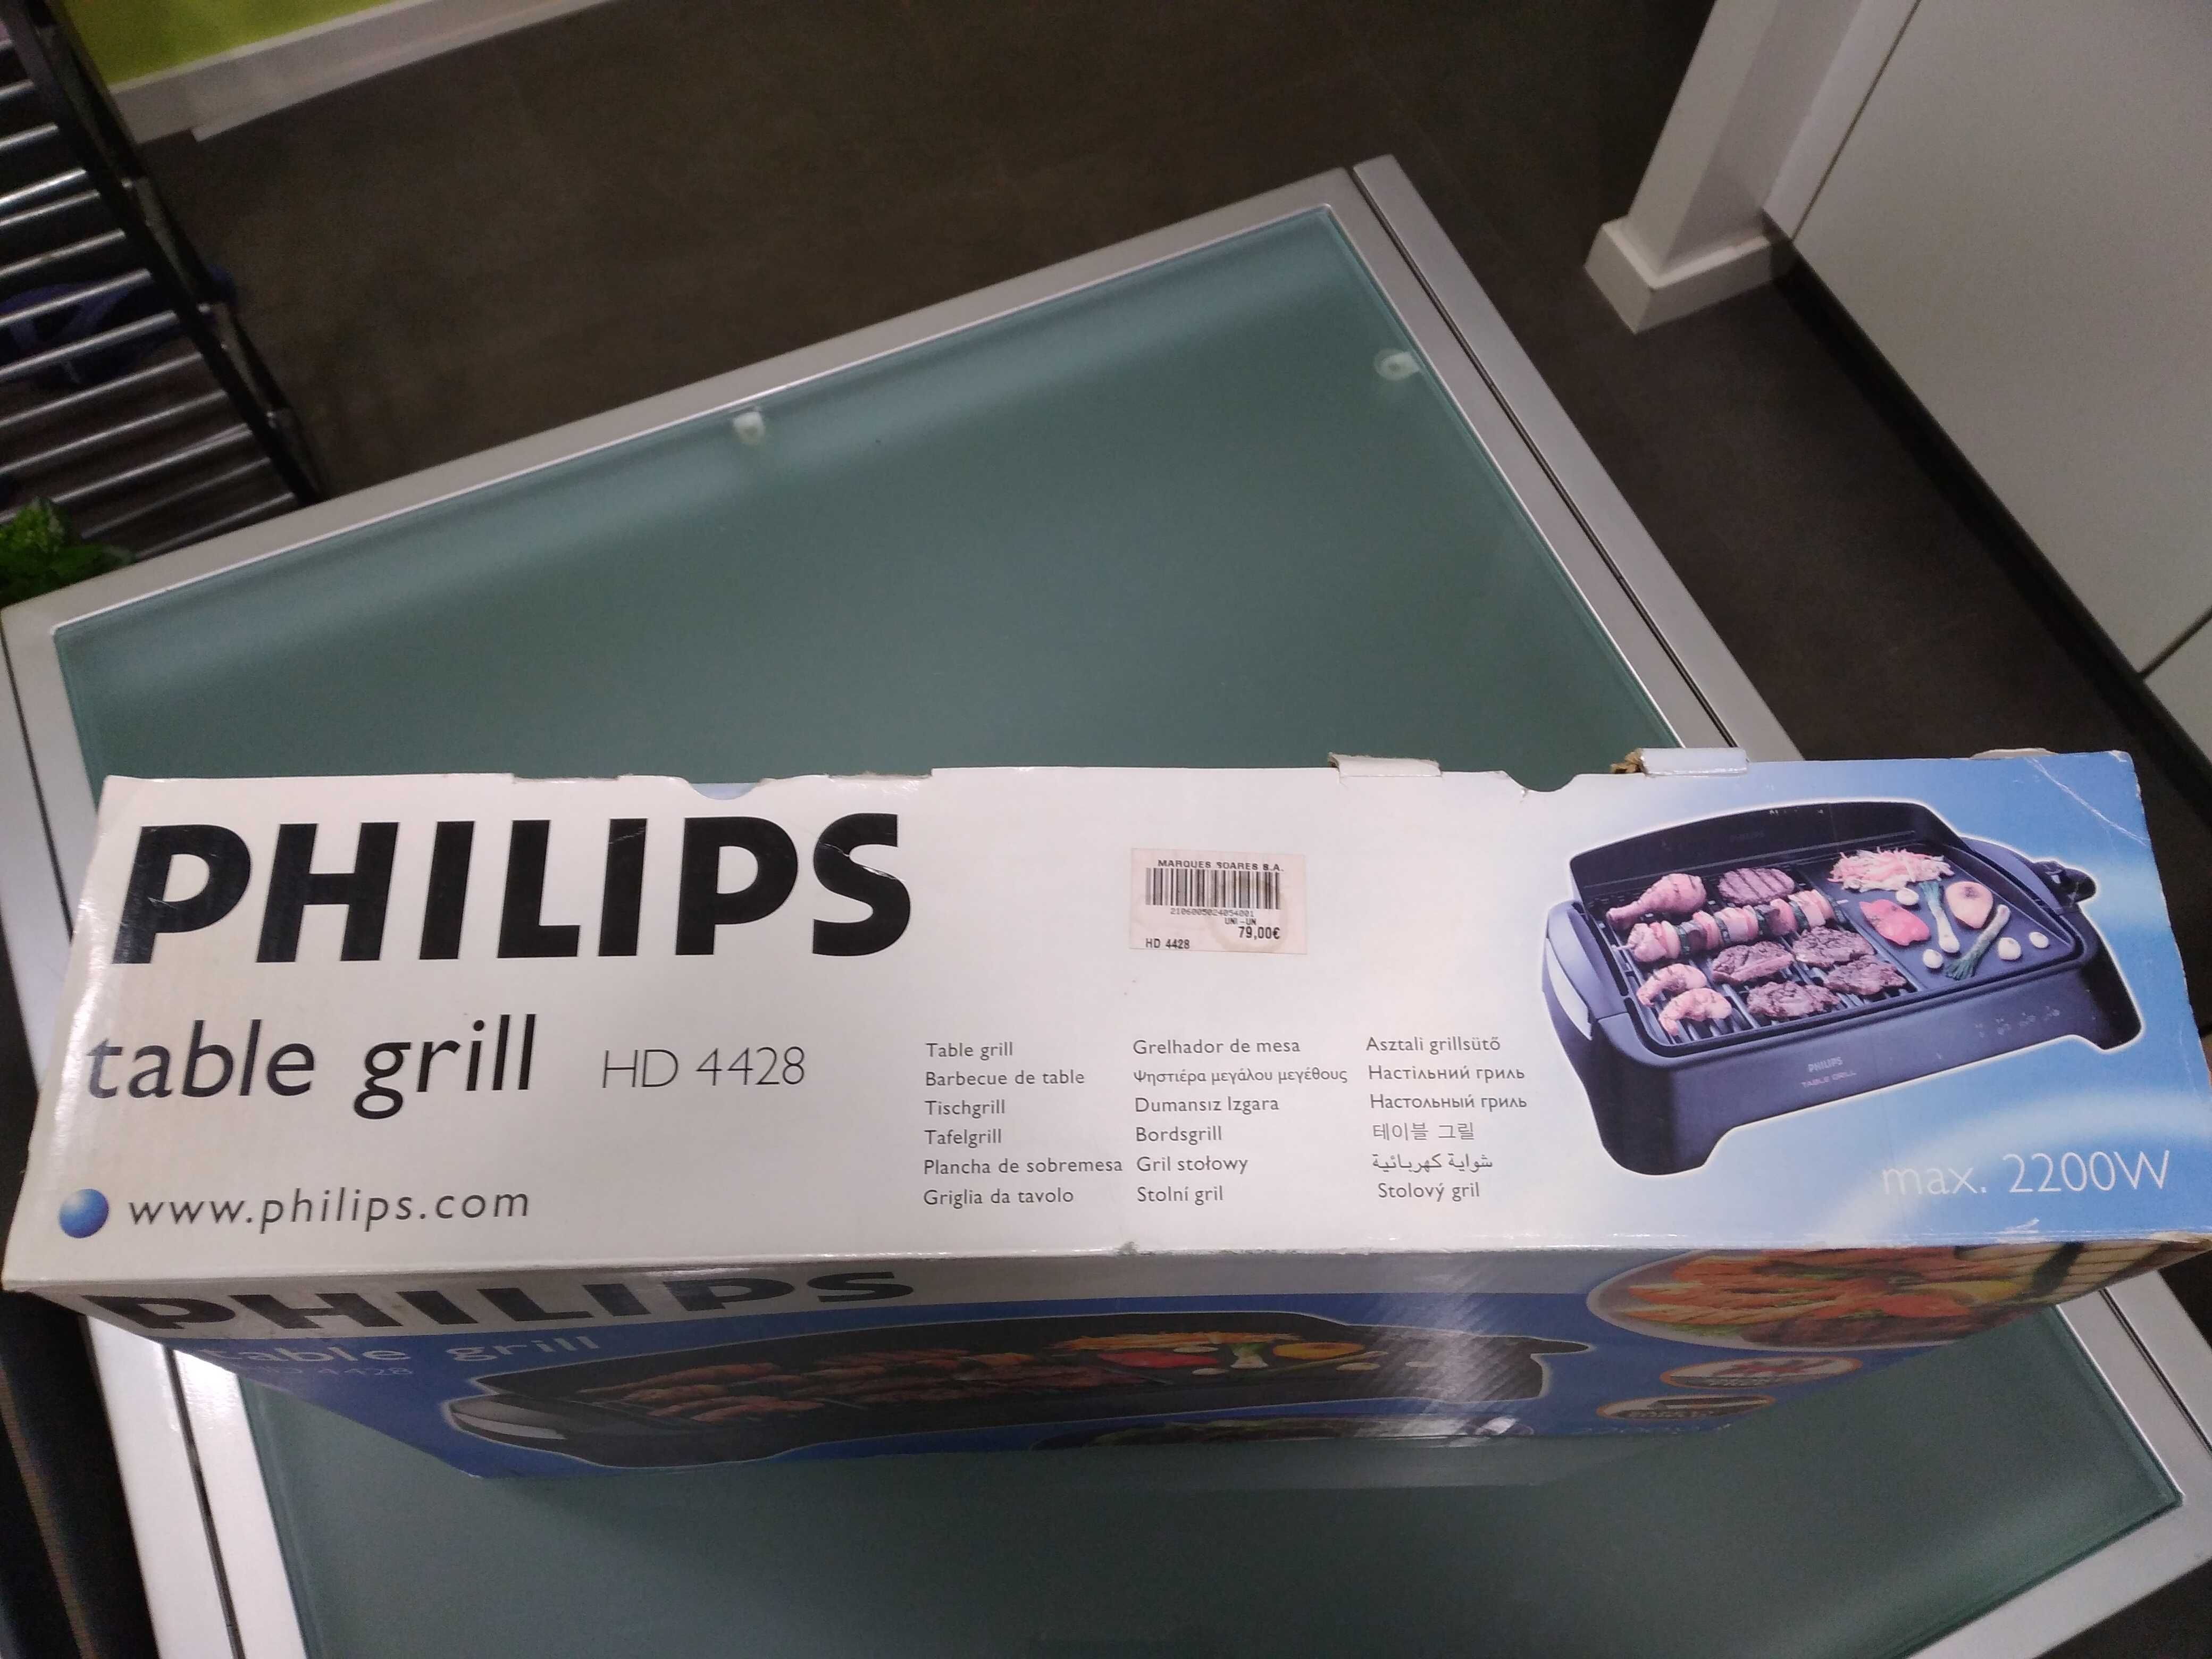 Grelhador de mesa Philips HD 4428